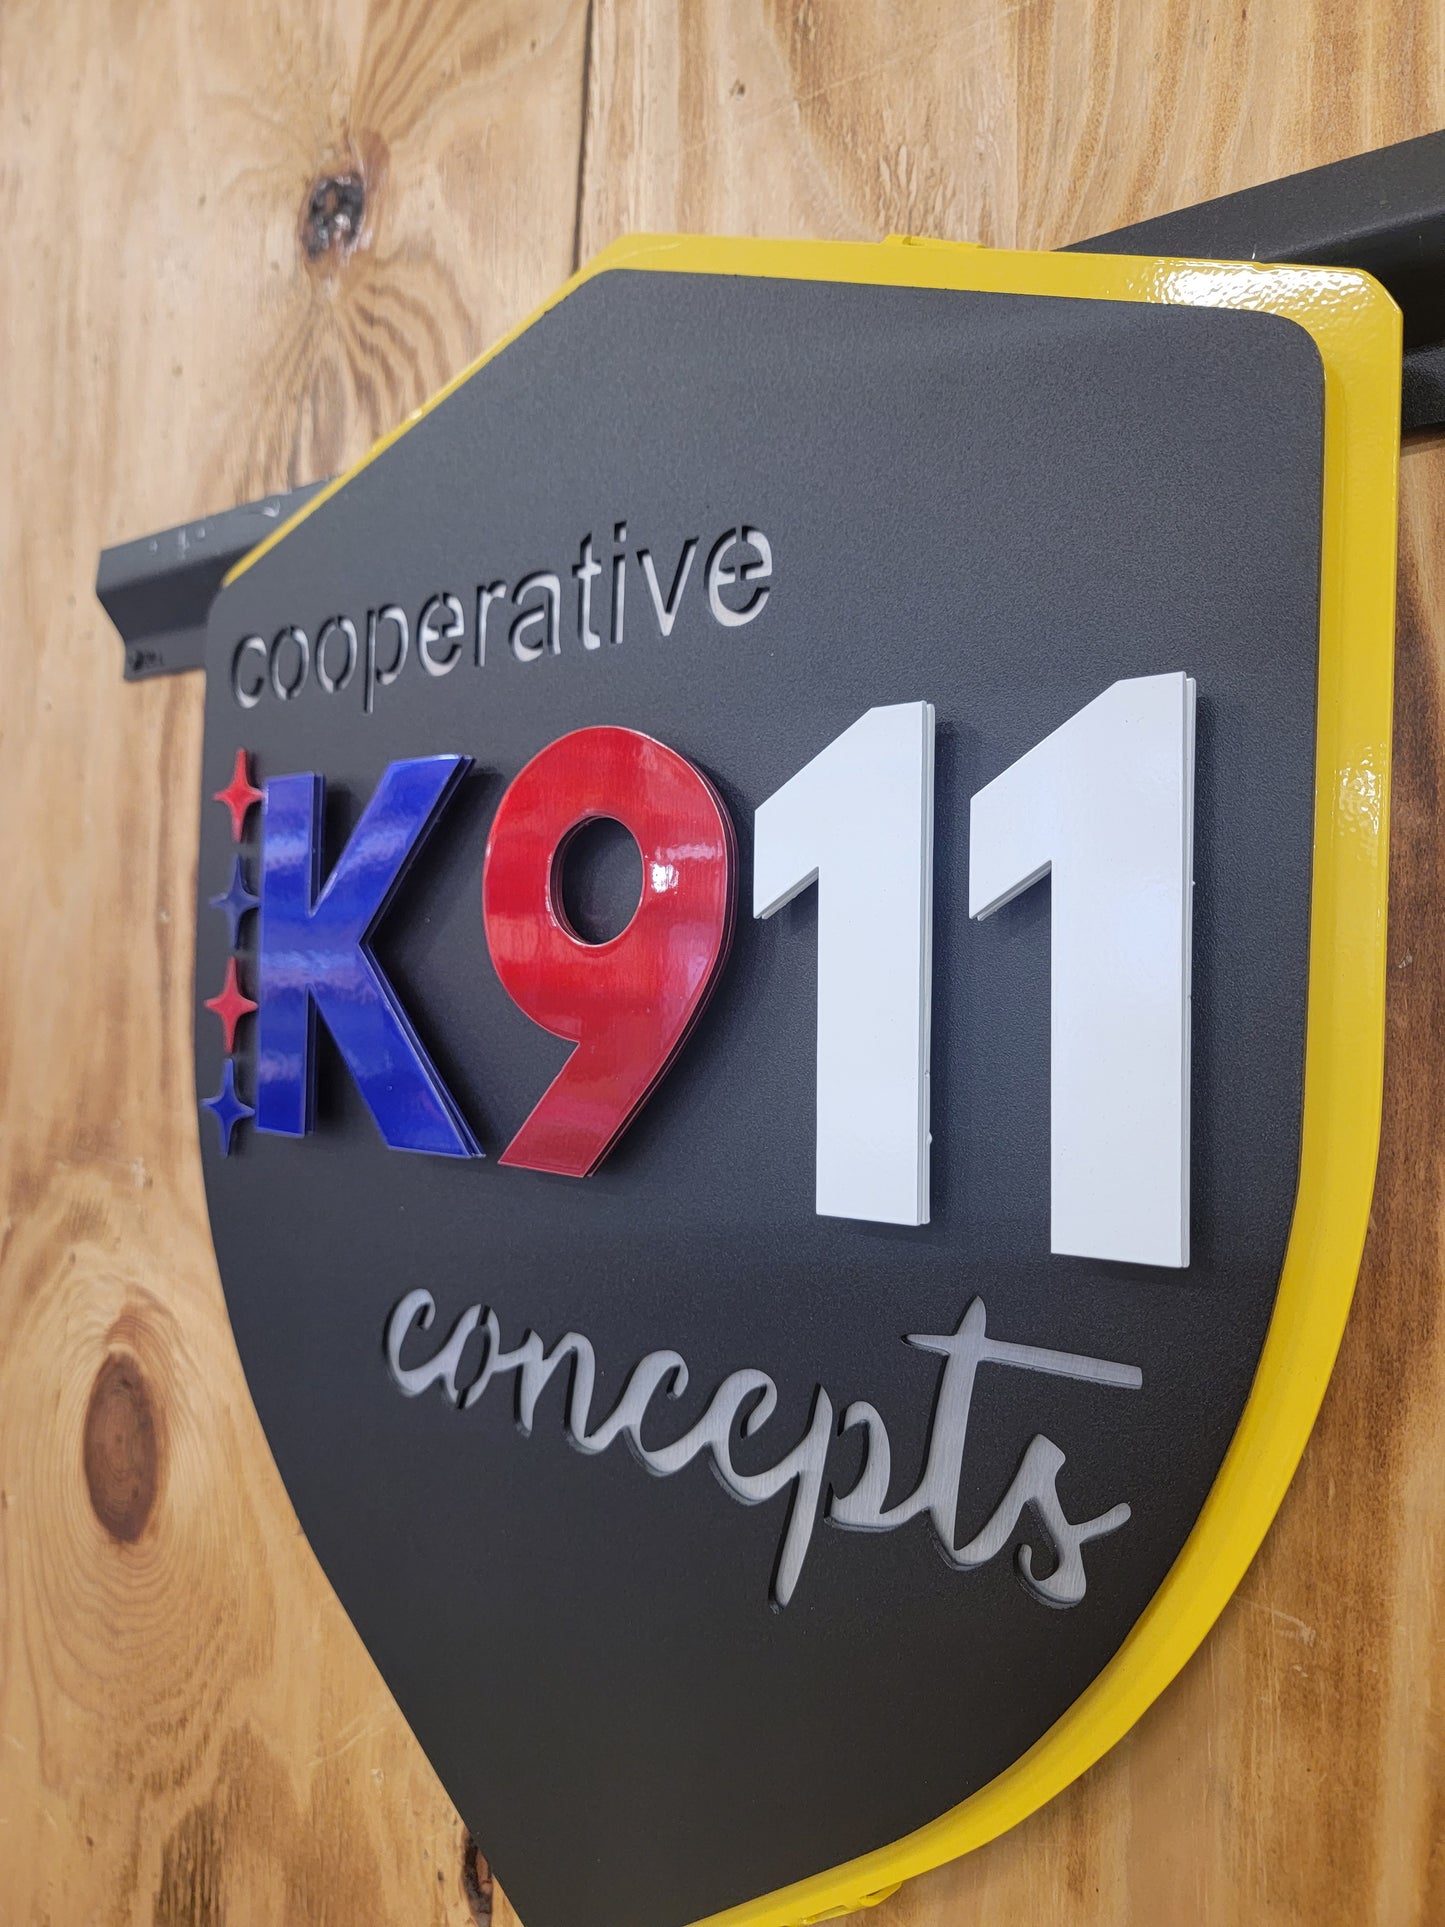 Cooperative K 911 Concepts